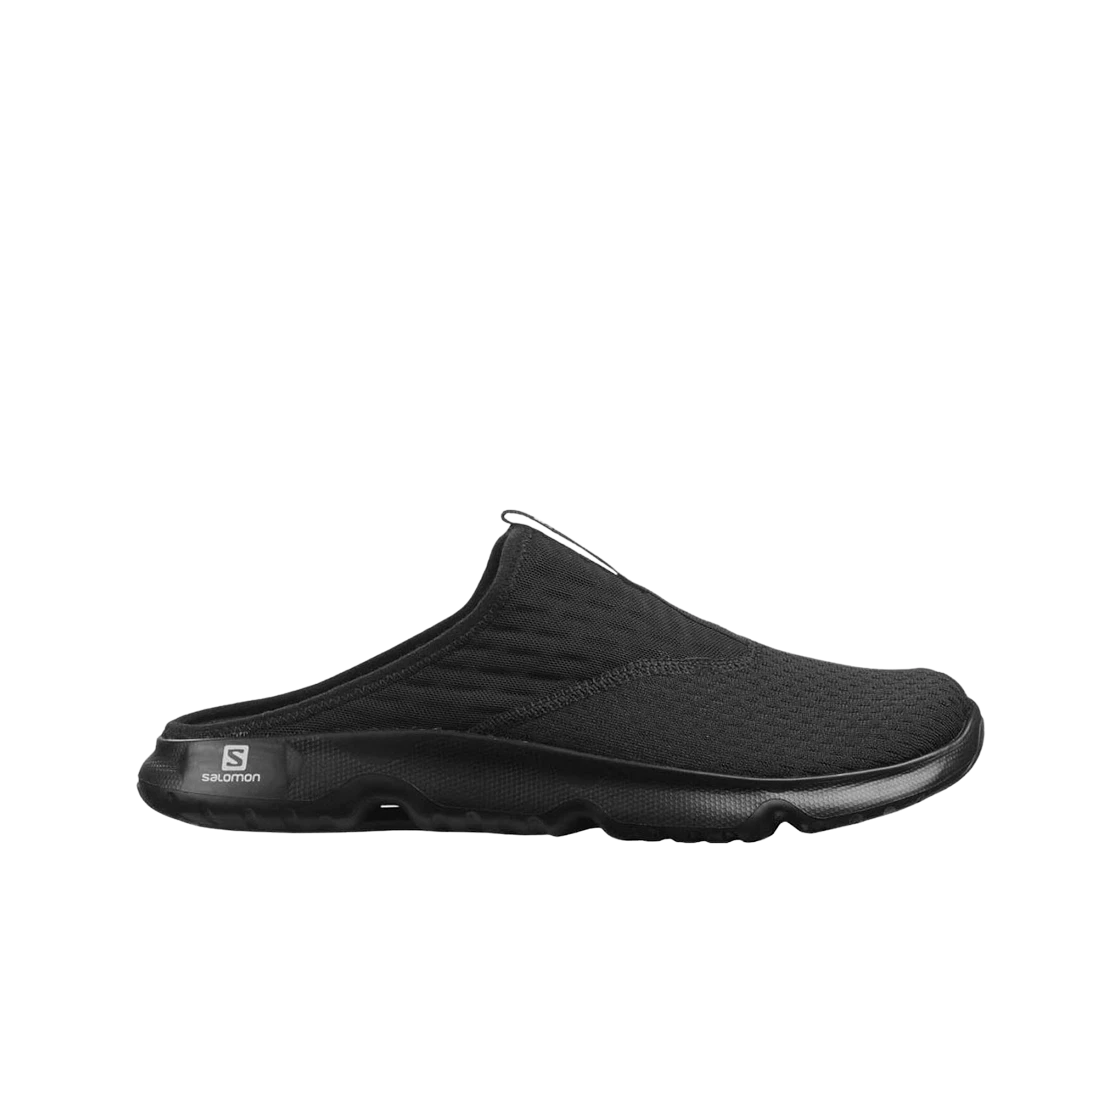 SASOM  shoes Salomon Reelax Slide 5.0 Black Check the latest